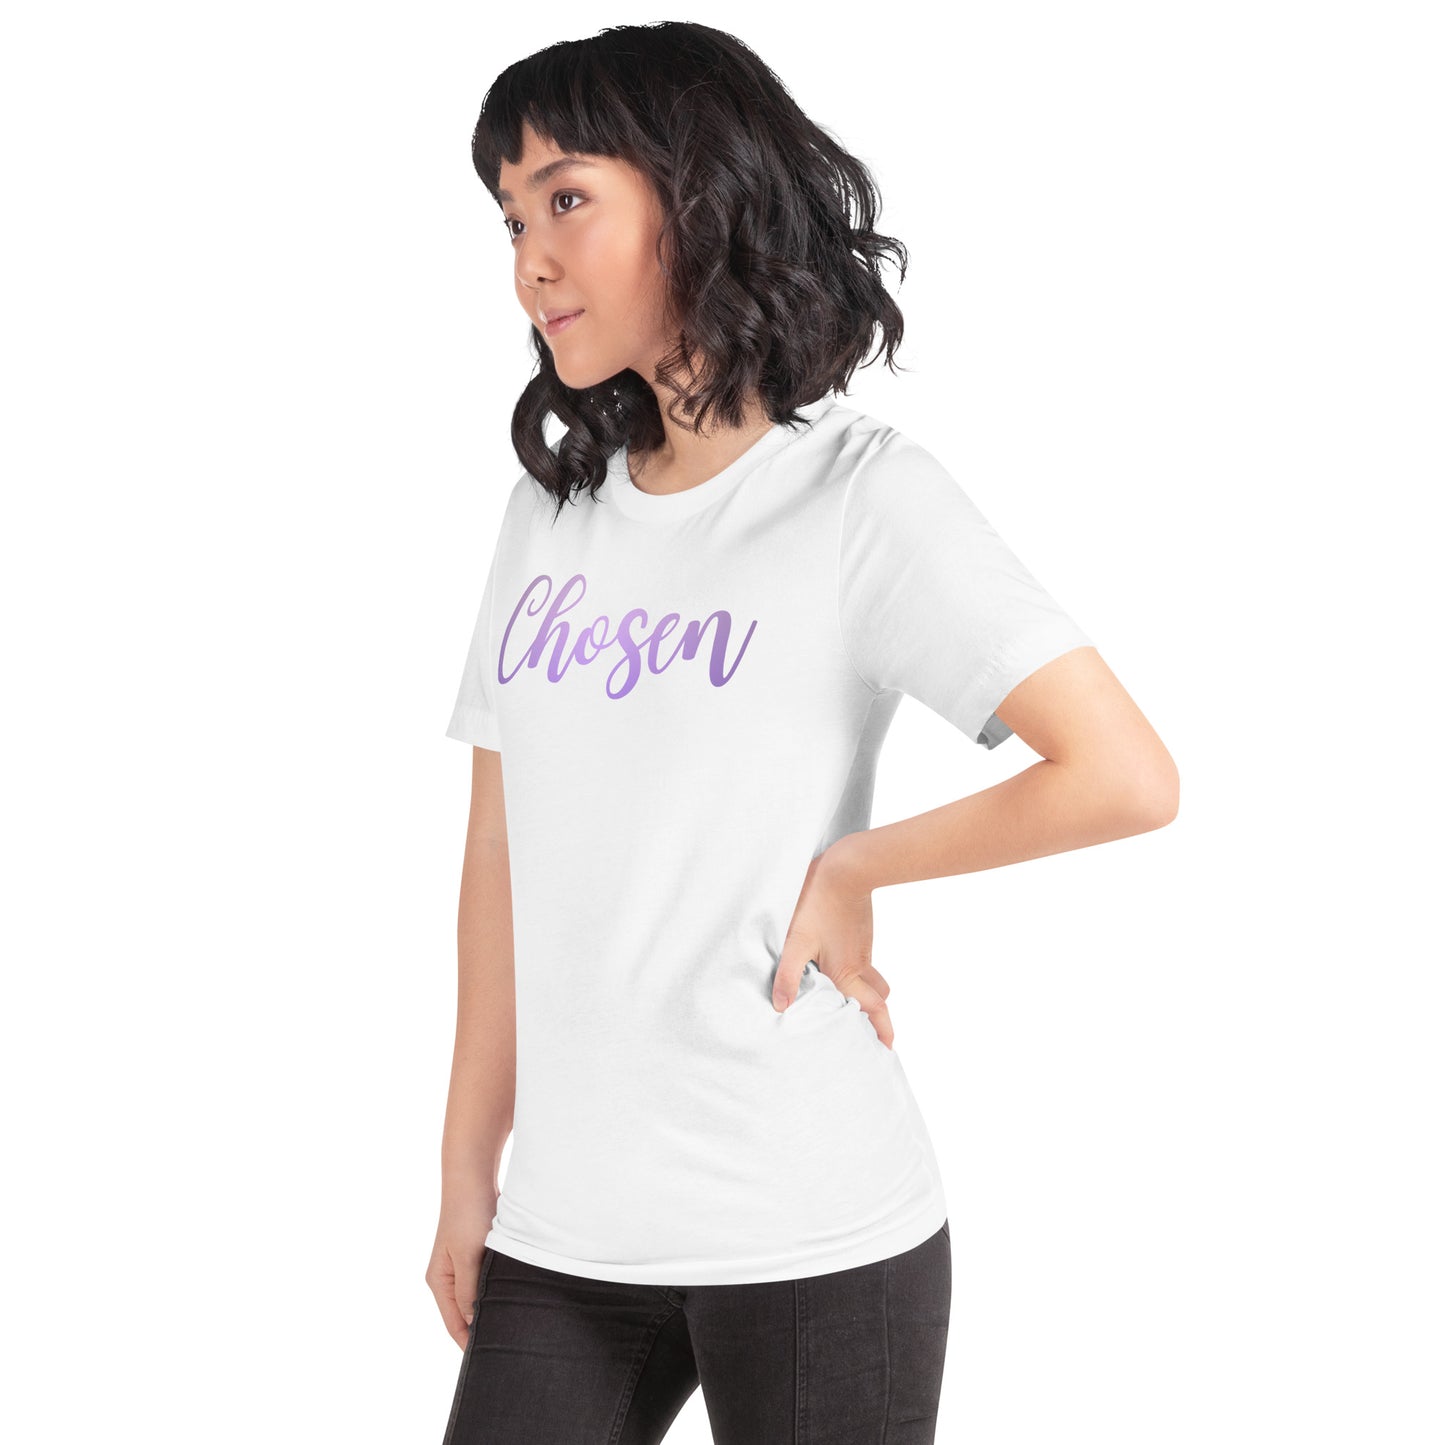 Chosen purple font- Unisex t-shirt